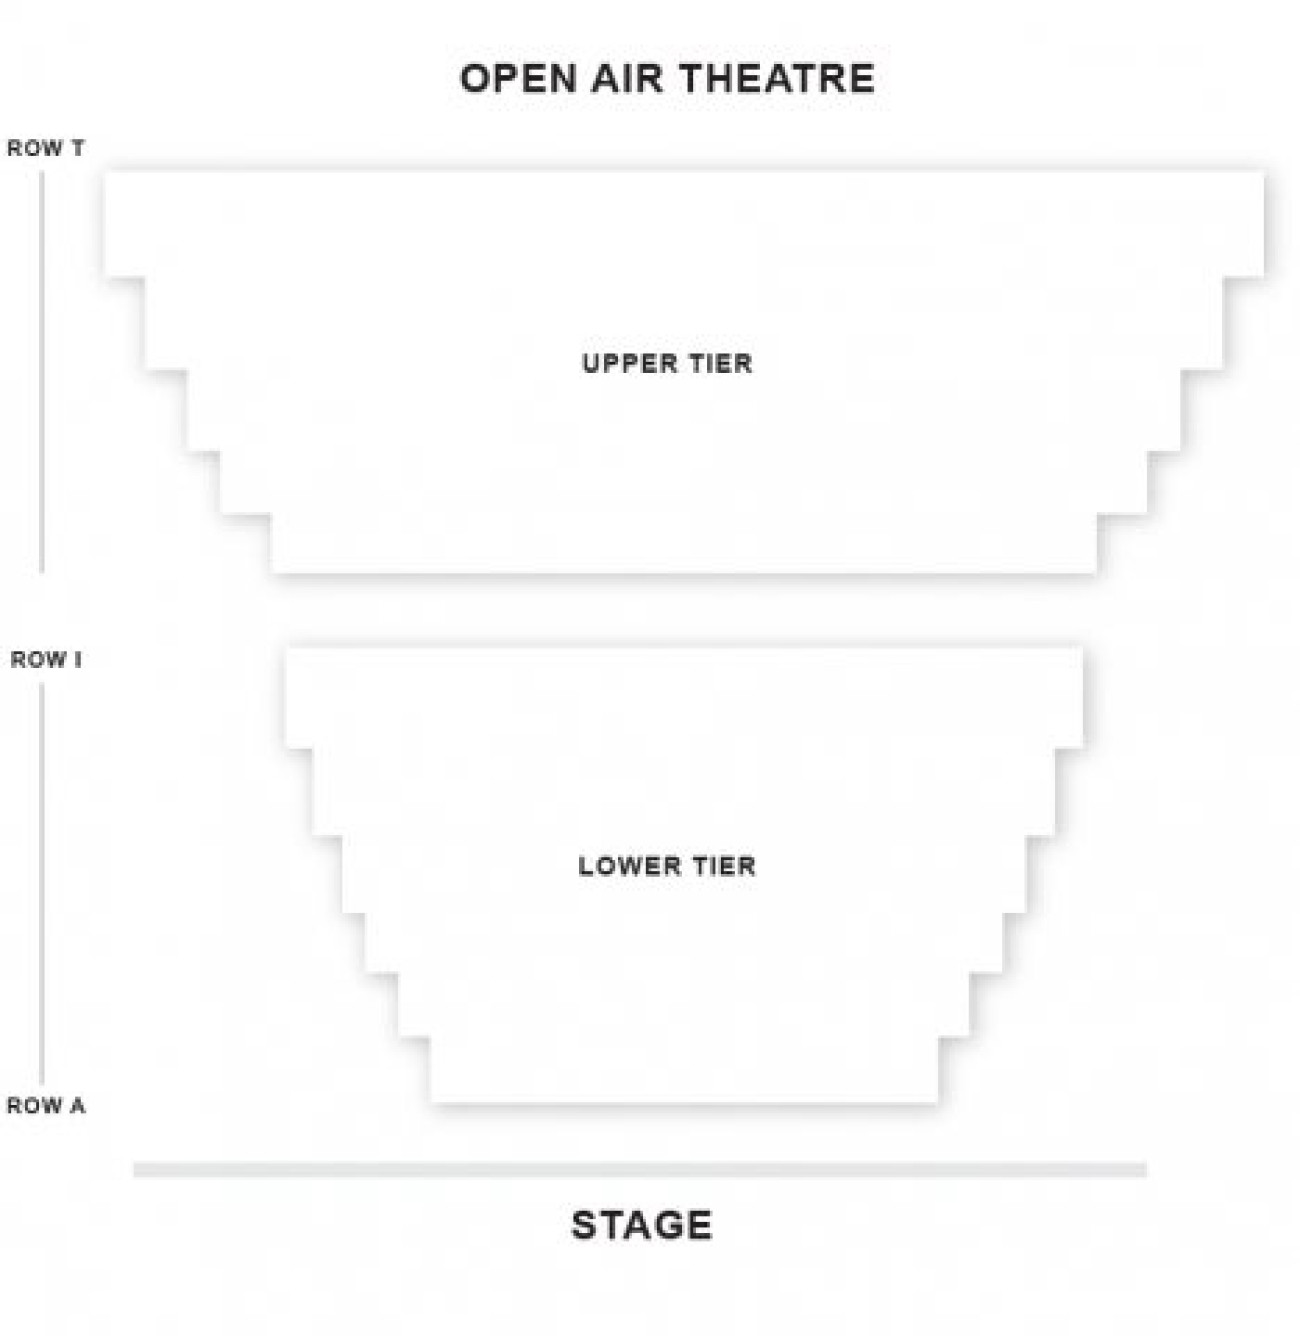 Regent's Park Open Air Theatre - Plan de Salle